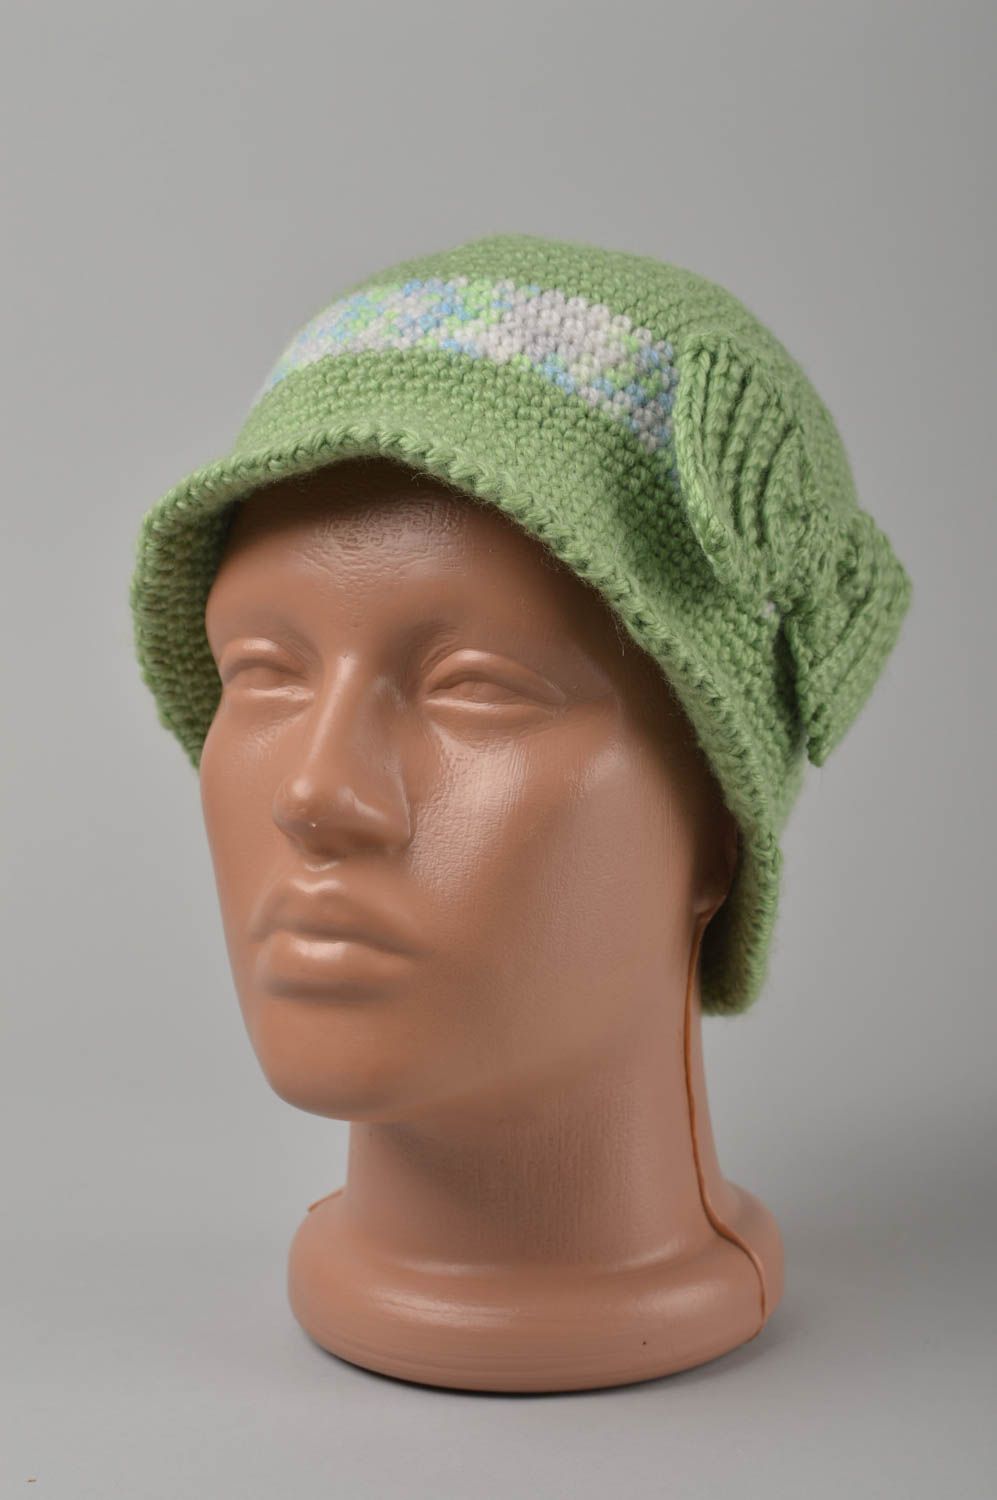 Handmade hat designer hat green hat with bow crocheted hat gift ideas warm hat photo 1